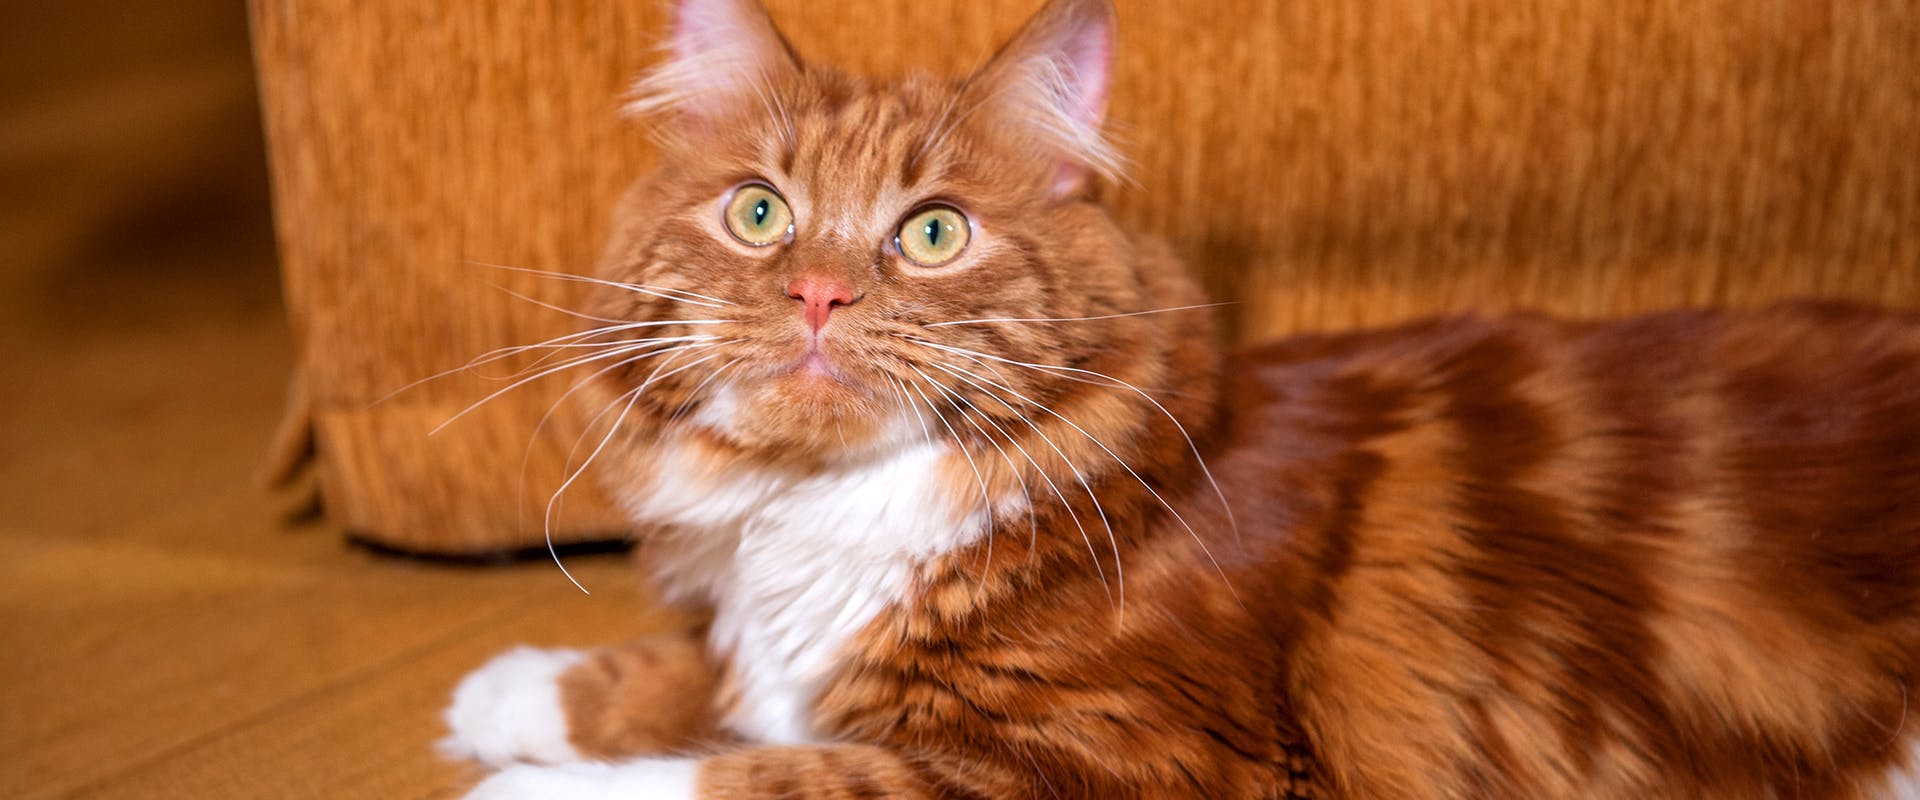 Rare cat breeds - American Bobtail cat